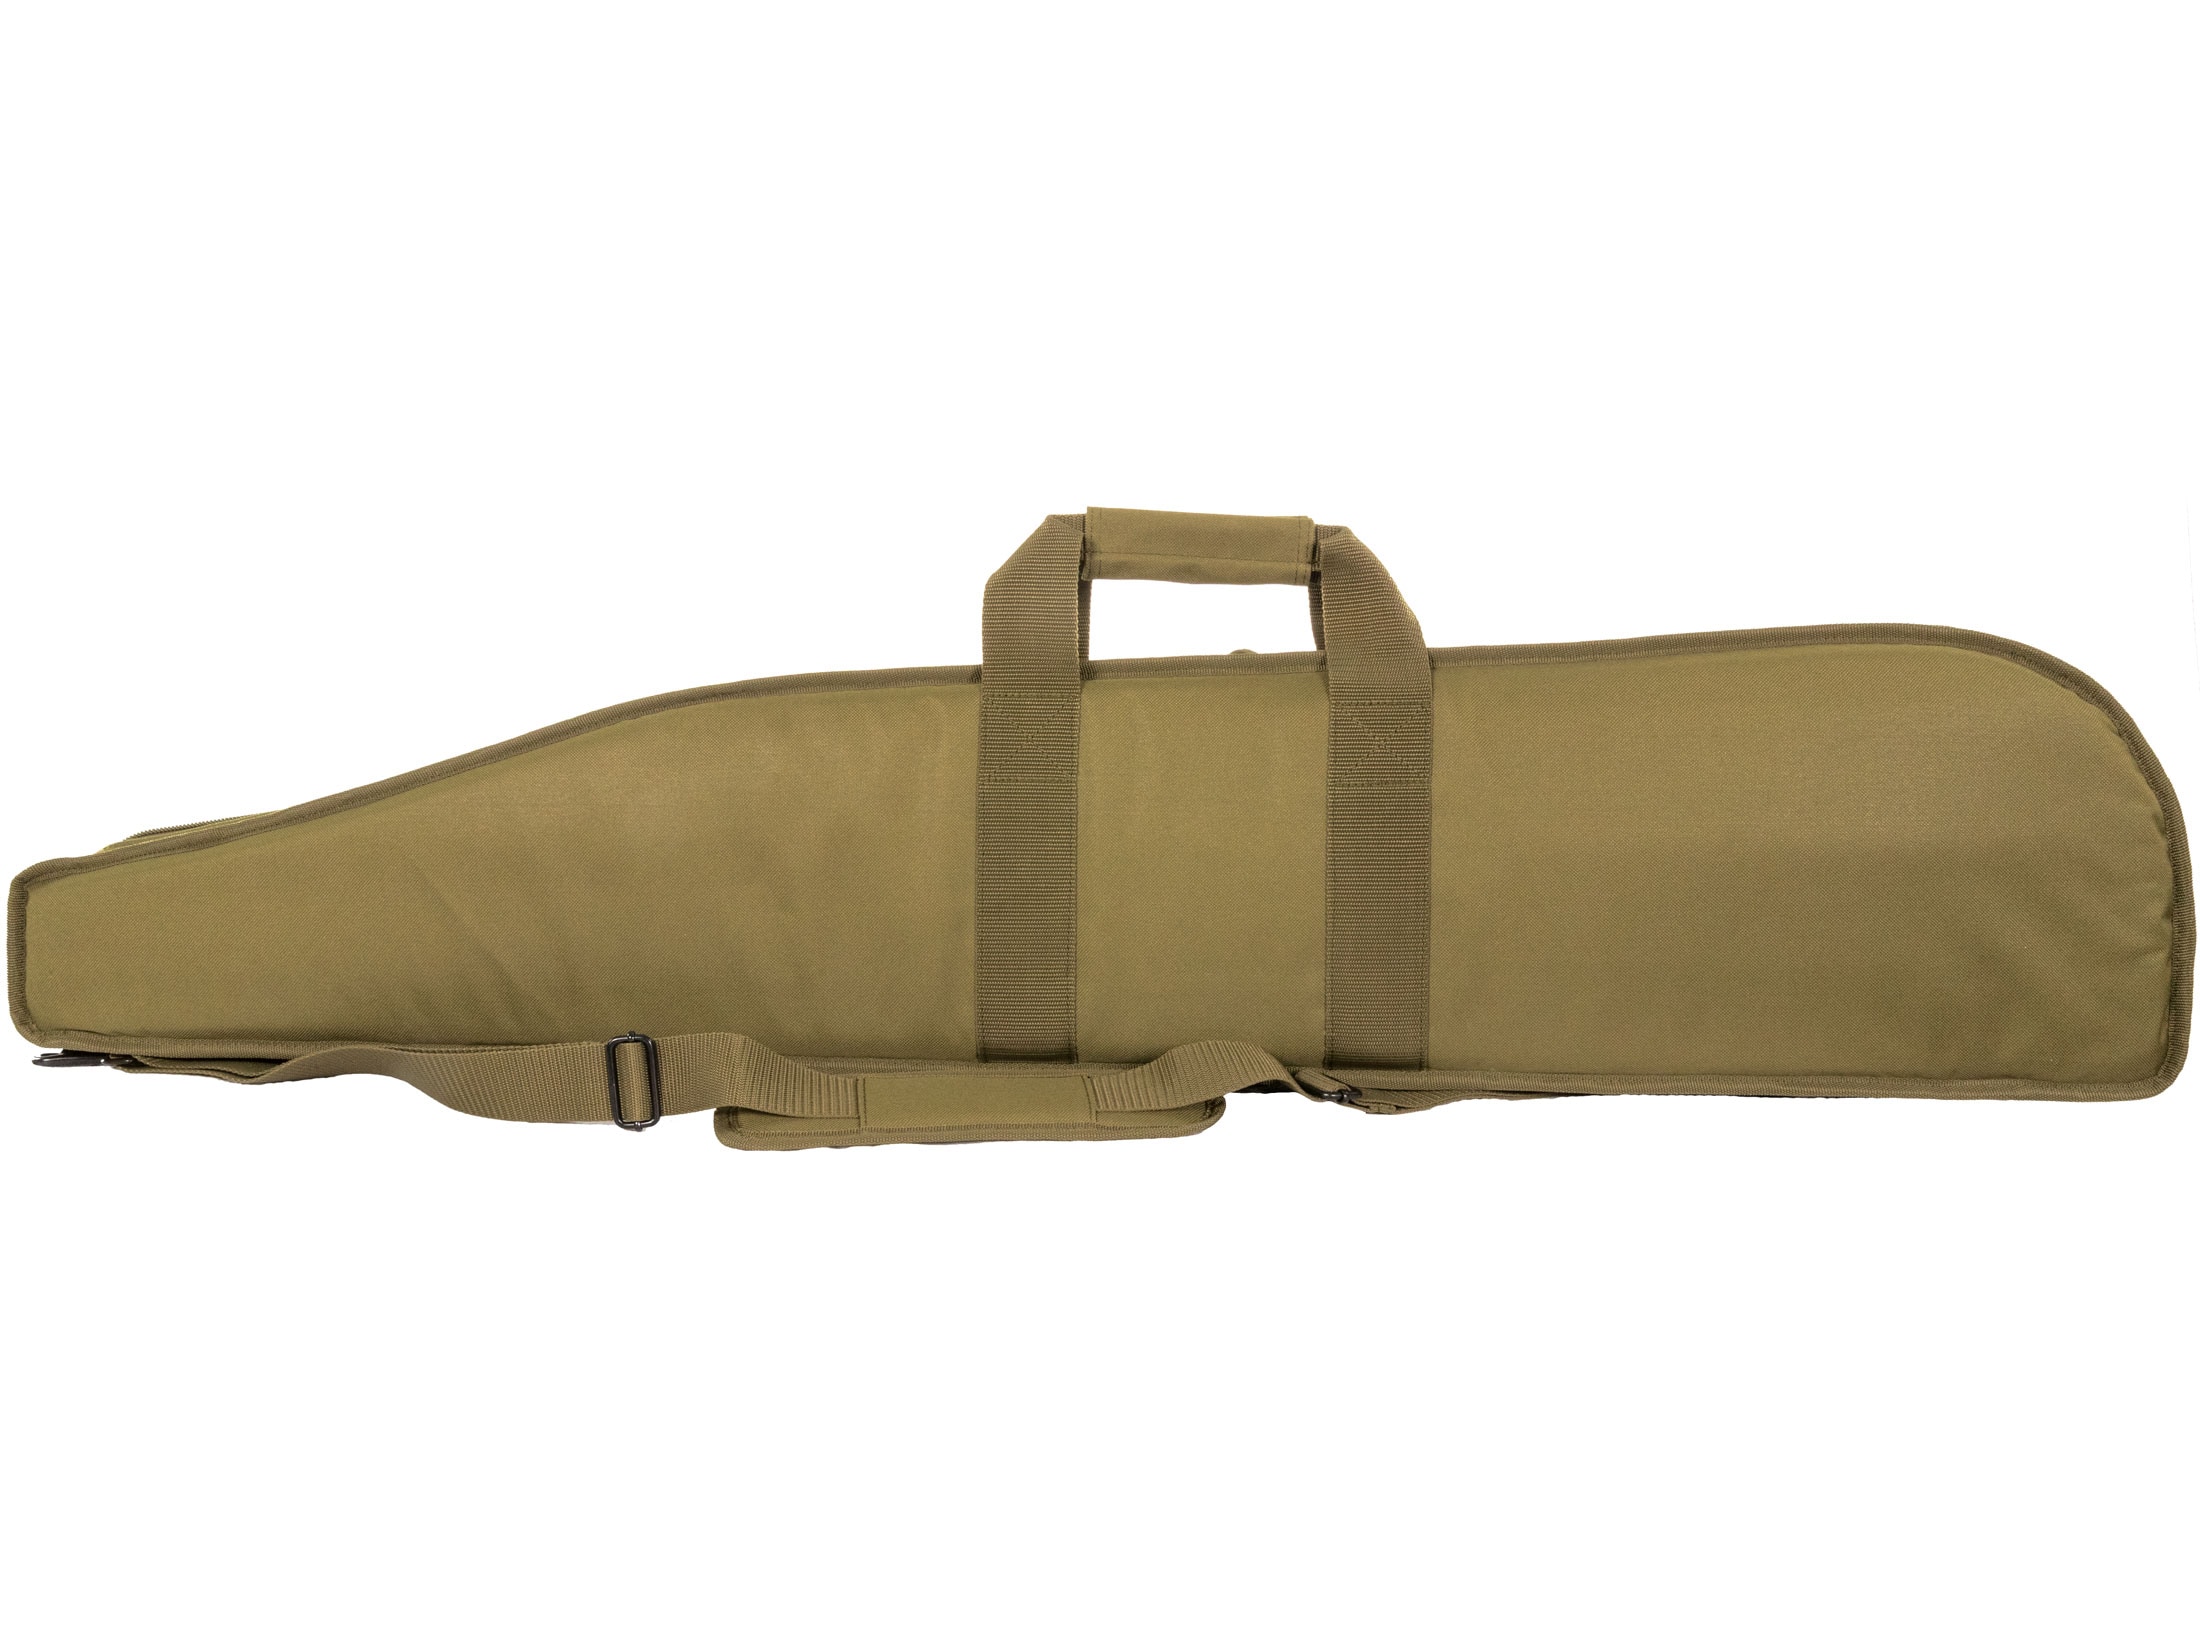 Great Canvas Heavy Duty Scoped Rifle Shotgun Bag Soft Padded Rifle Case Backpack 